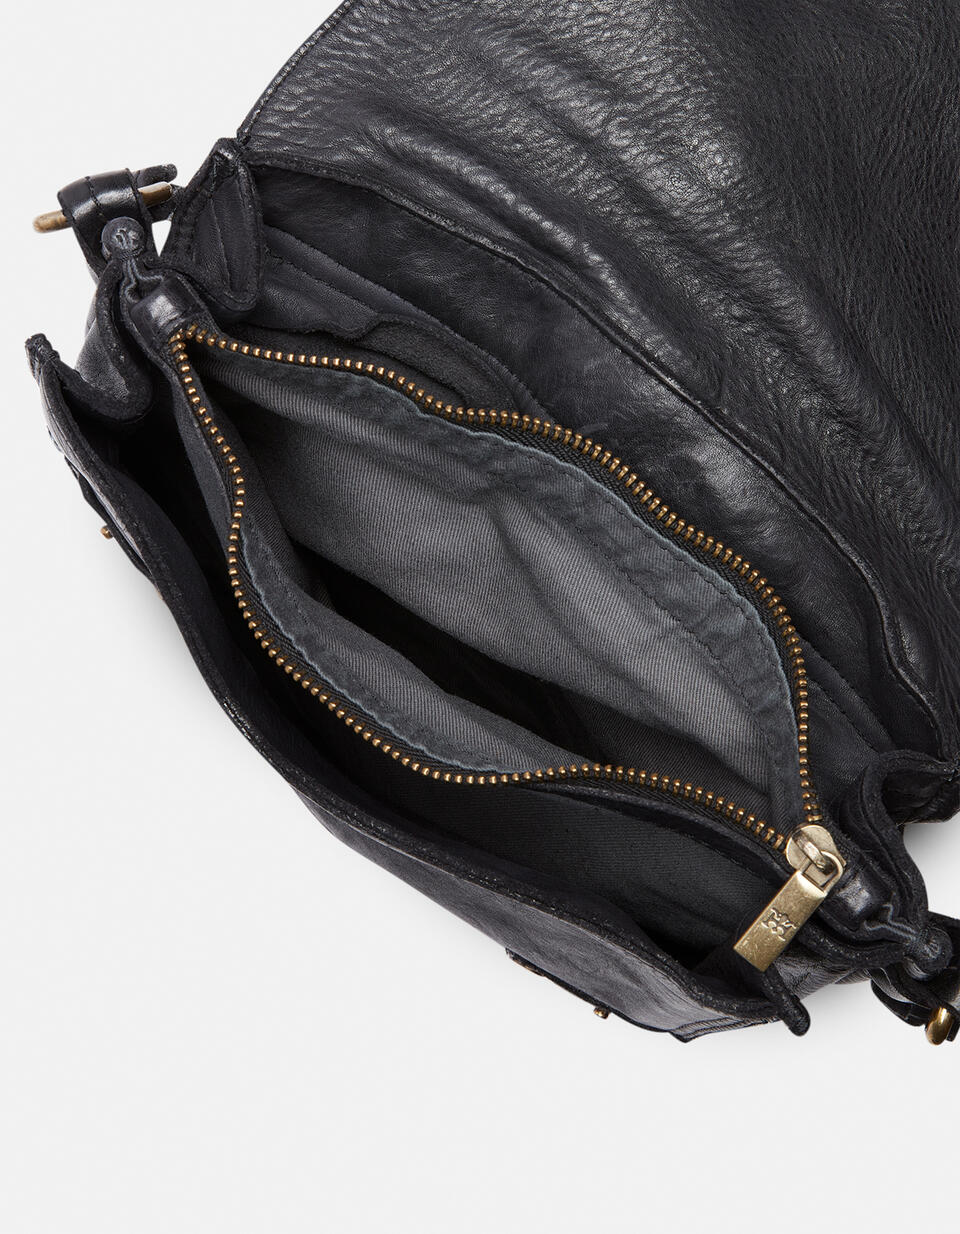 Millennial bag in natural leather - Crossbody Bags - MEN'S BAGS | bags NERO - Crossbody Bags - MEN'S BAGS | bagsCuoieria Fiorentina